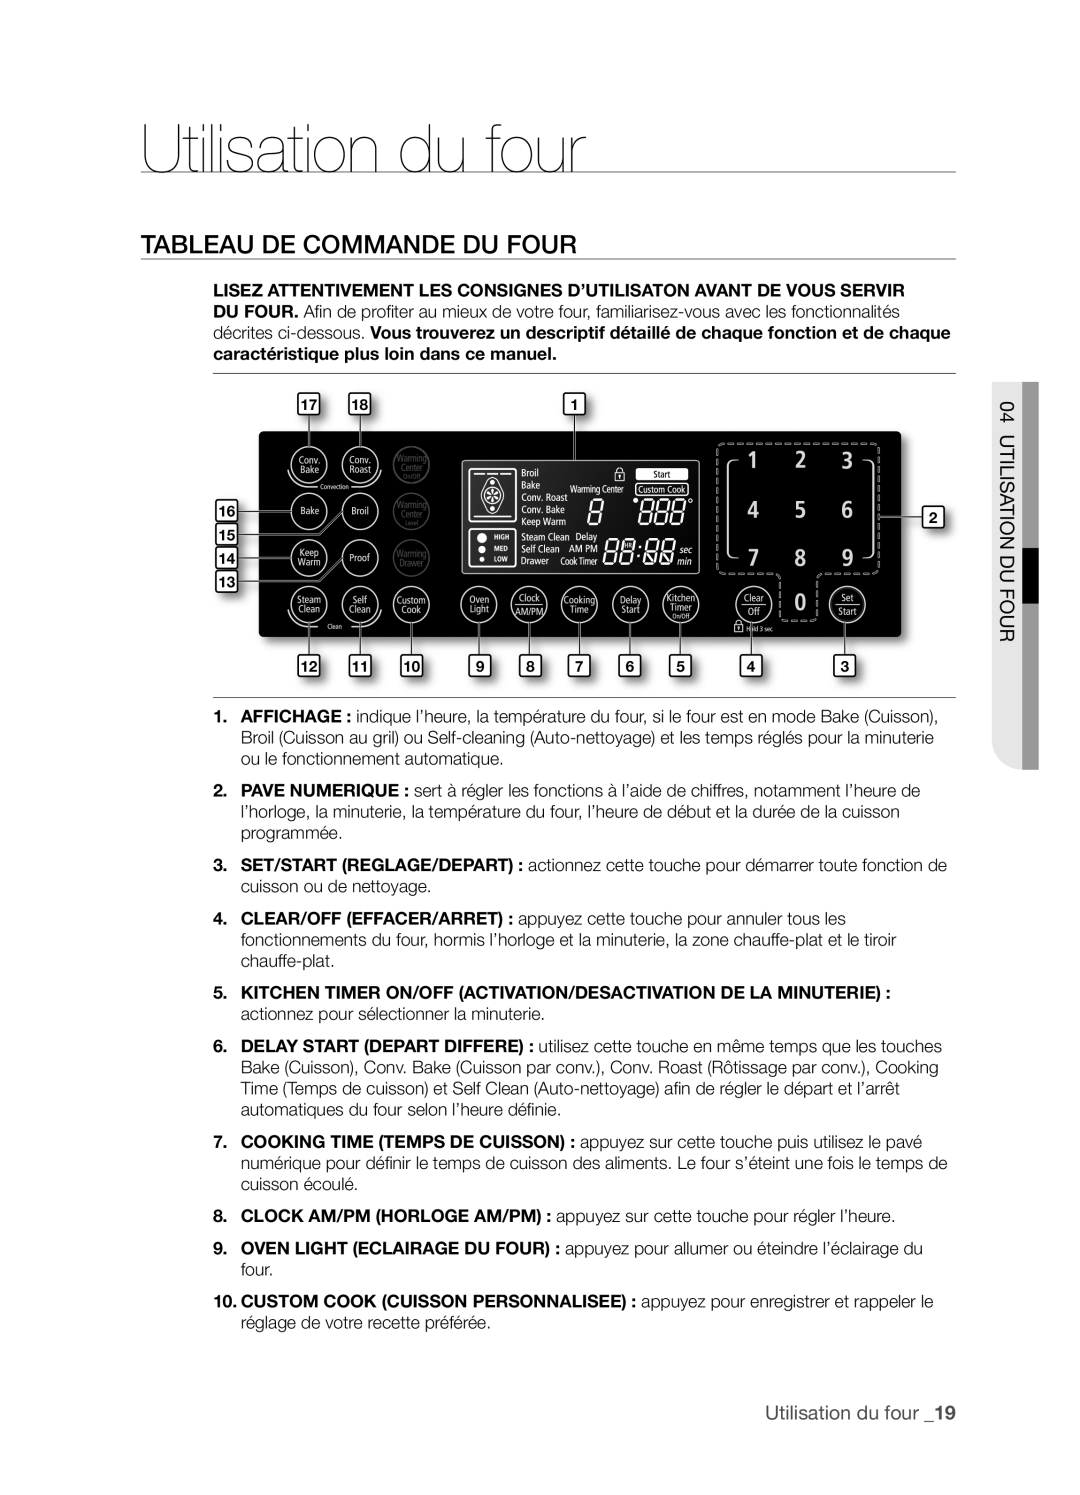 Samsung FTQ386LWX user manual Tableau De Commande Du Four, Utilisation Du Four, Utilisation du four _19 